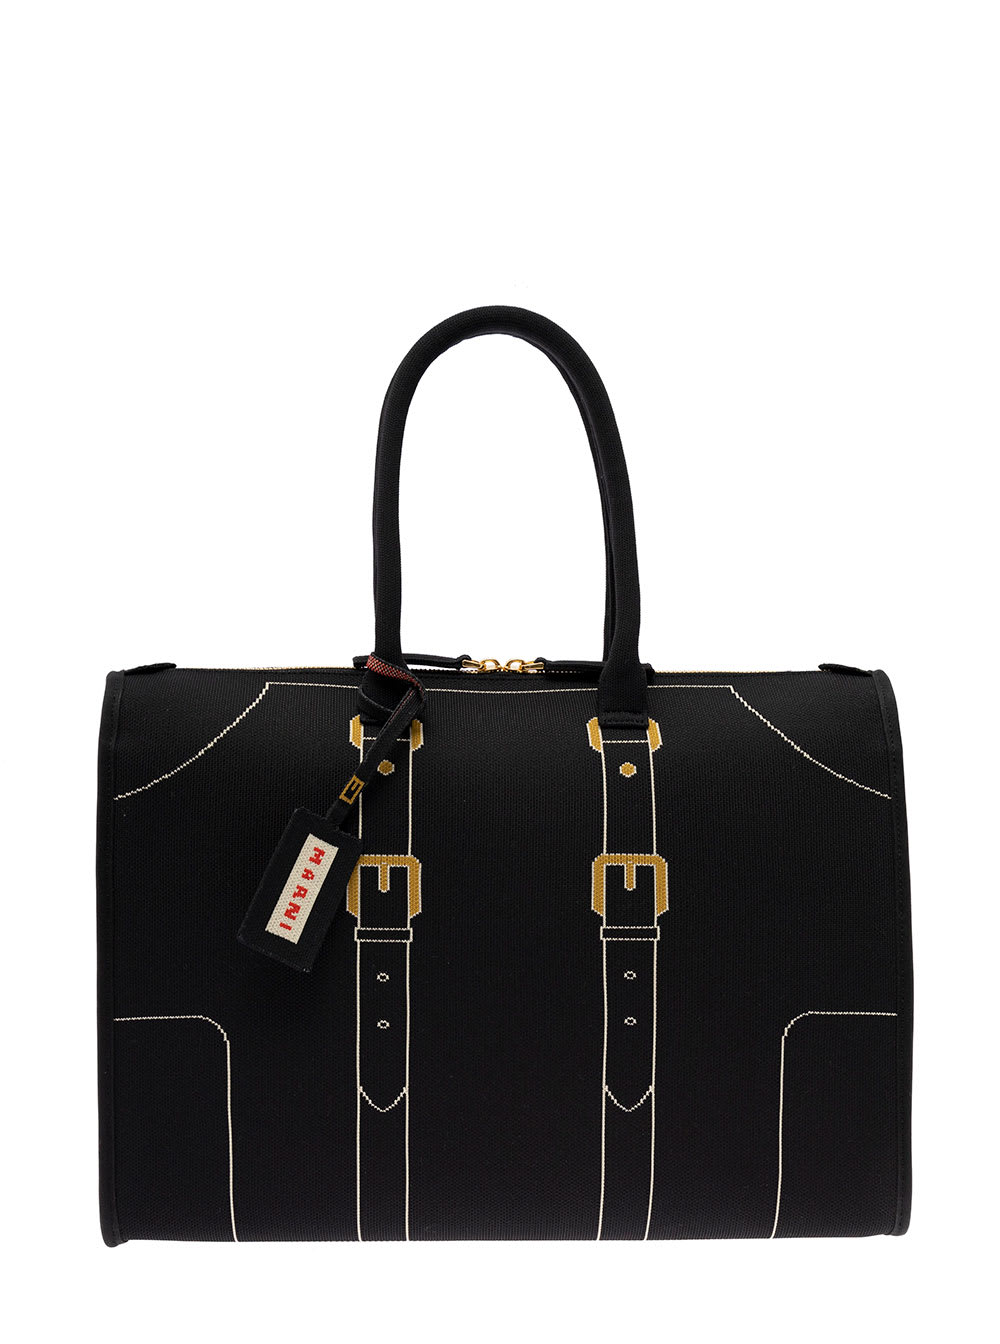 Marni Womens Black Fabric Handbag With Buckles Print